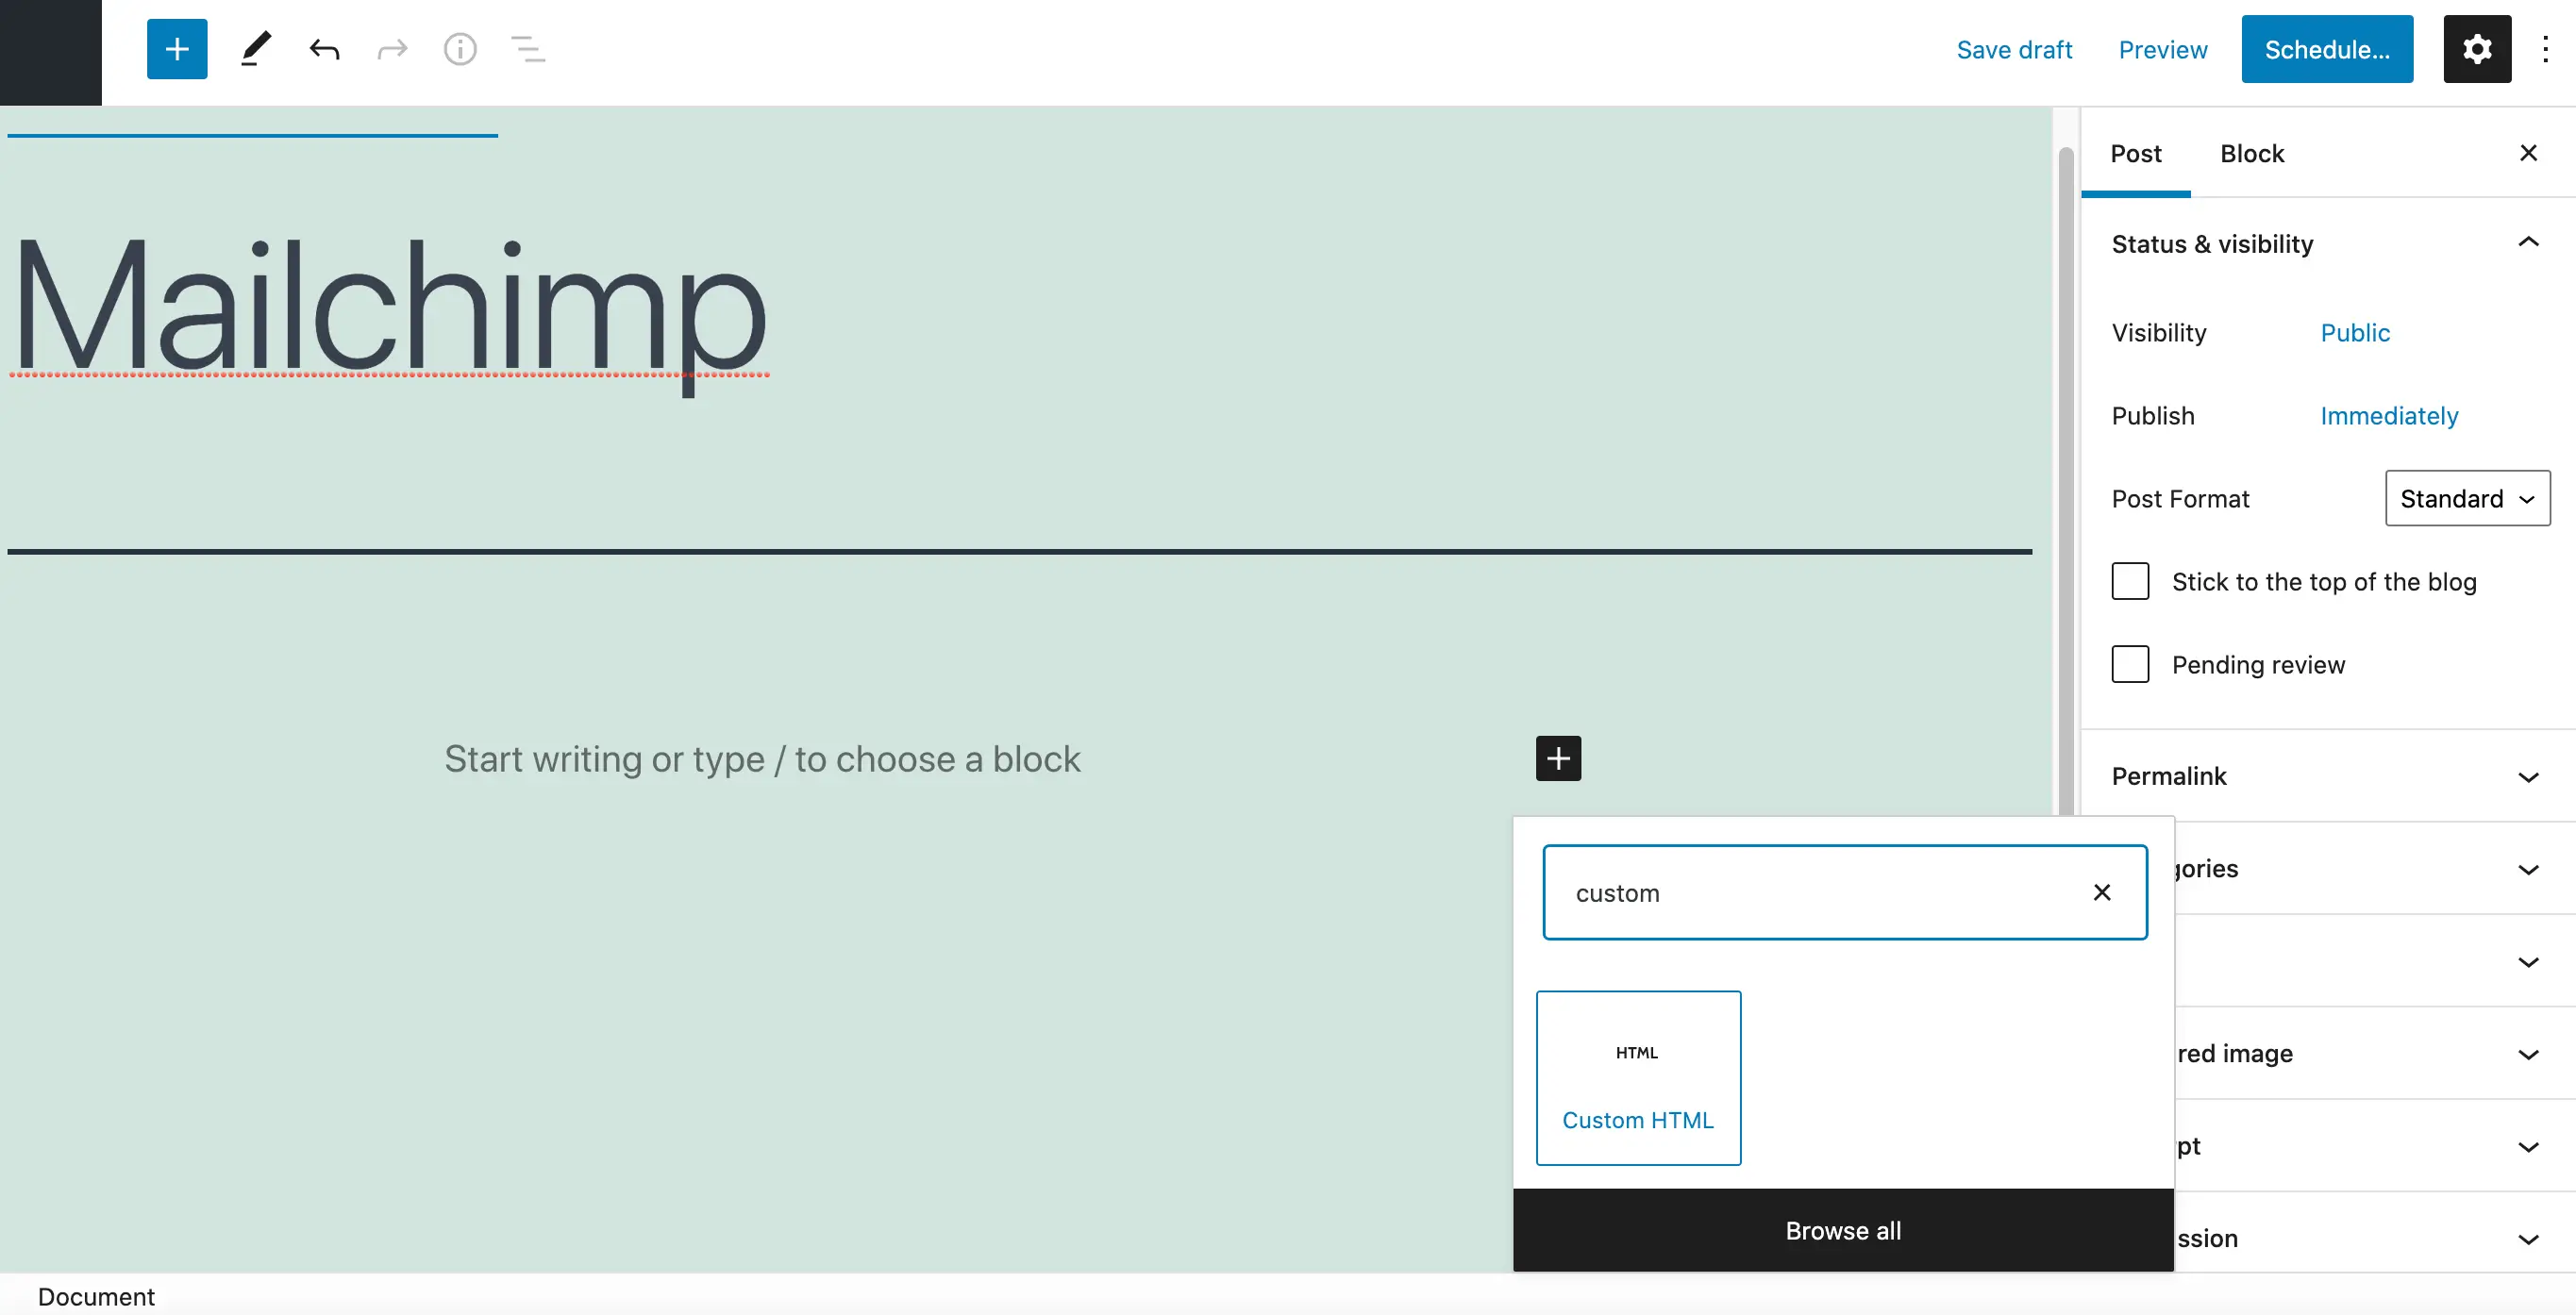 MailChimp for WordPress